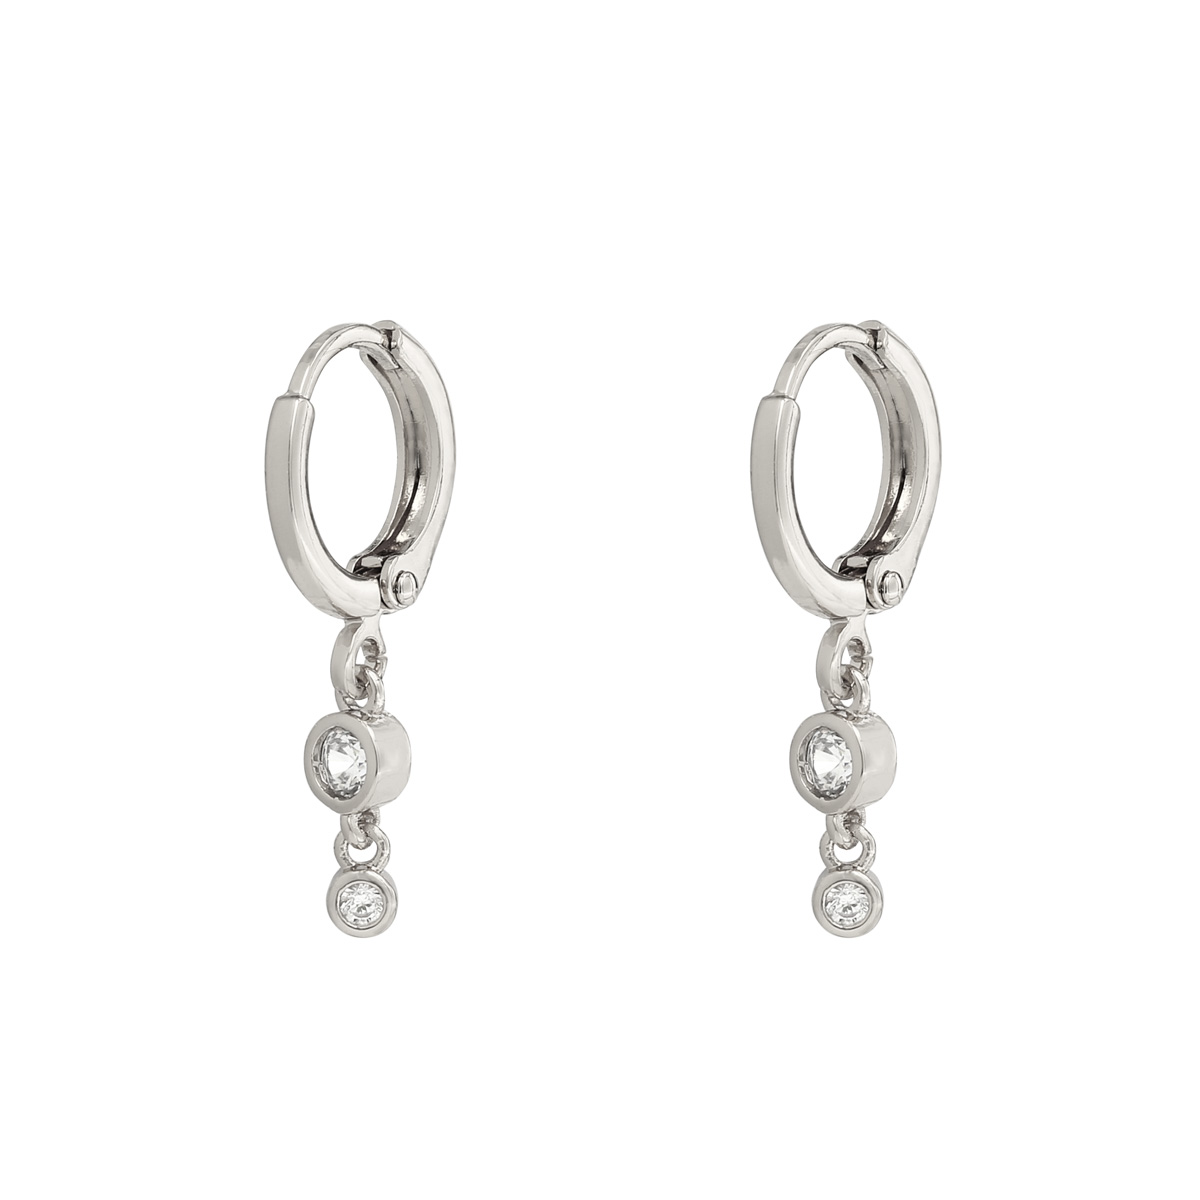 Earrings two Zirconia stones